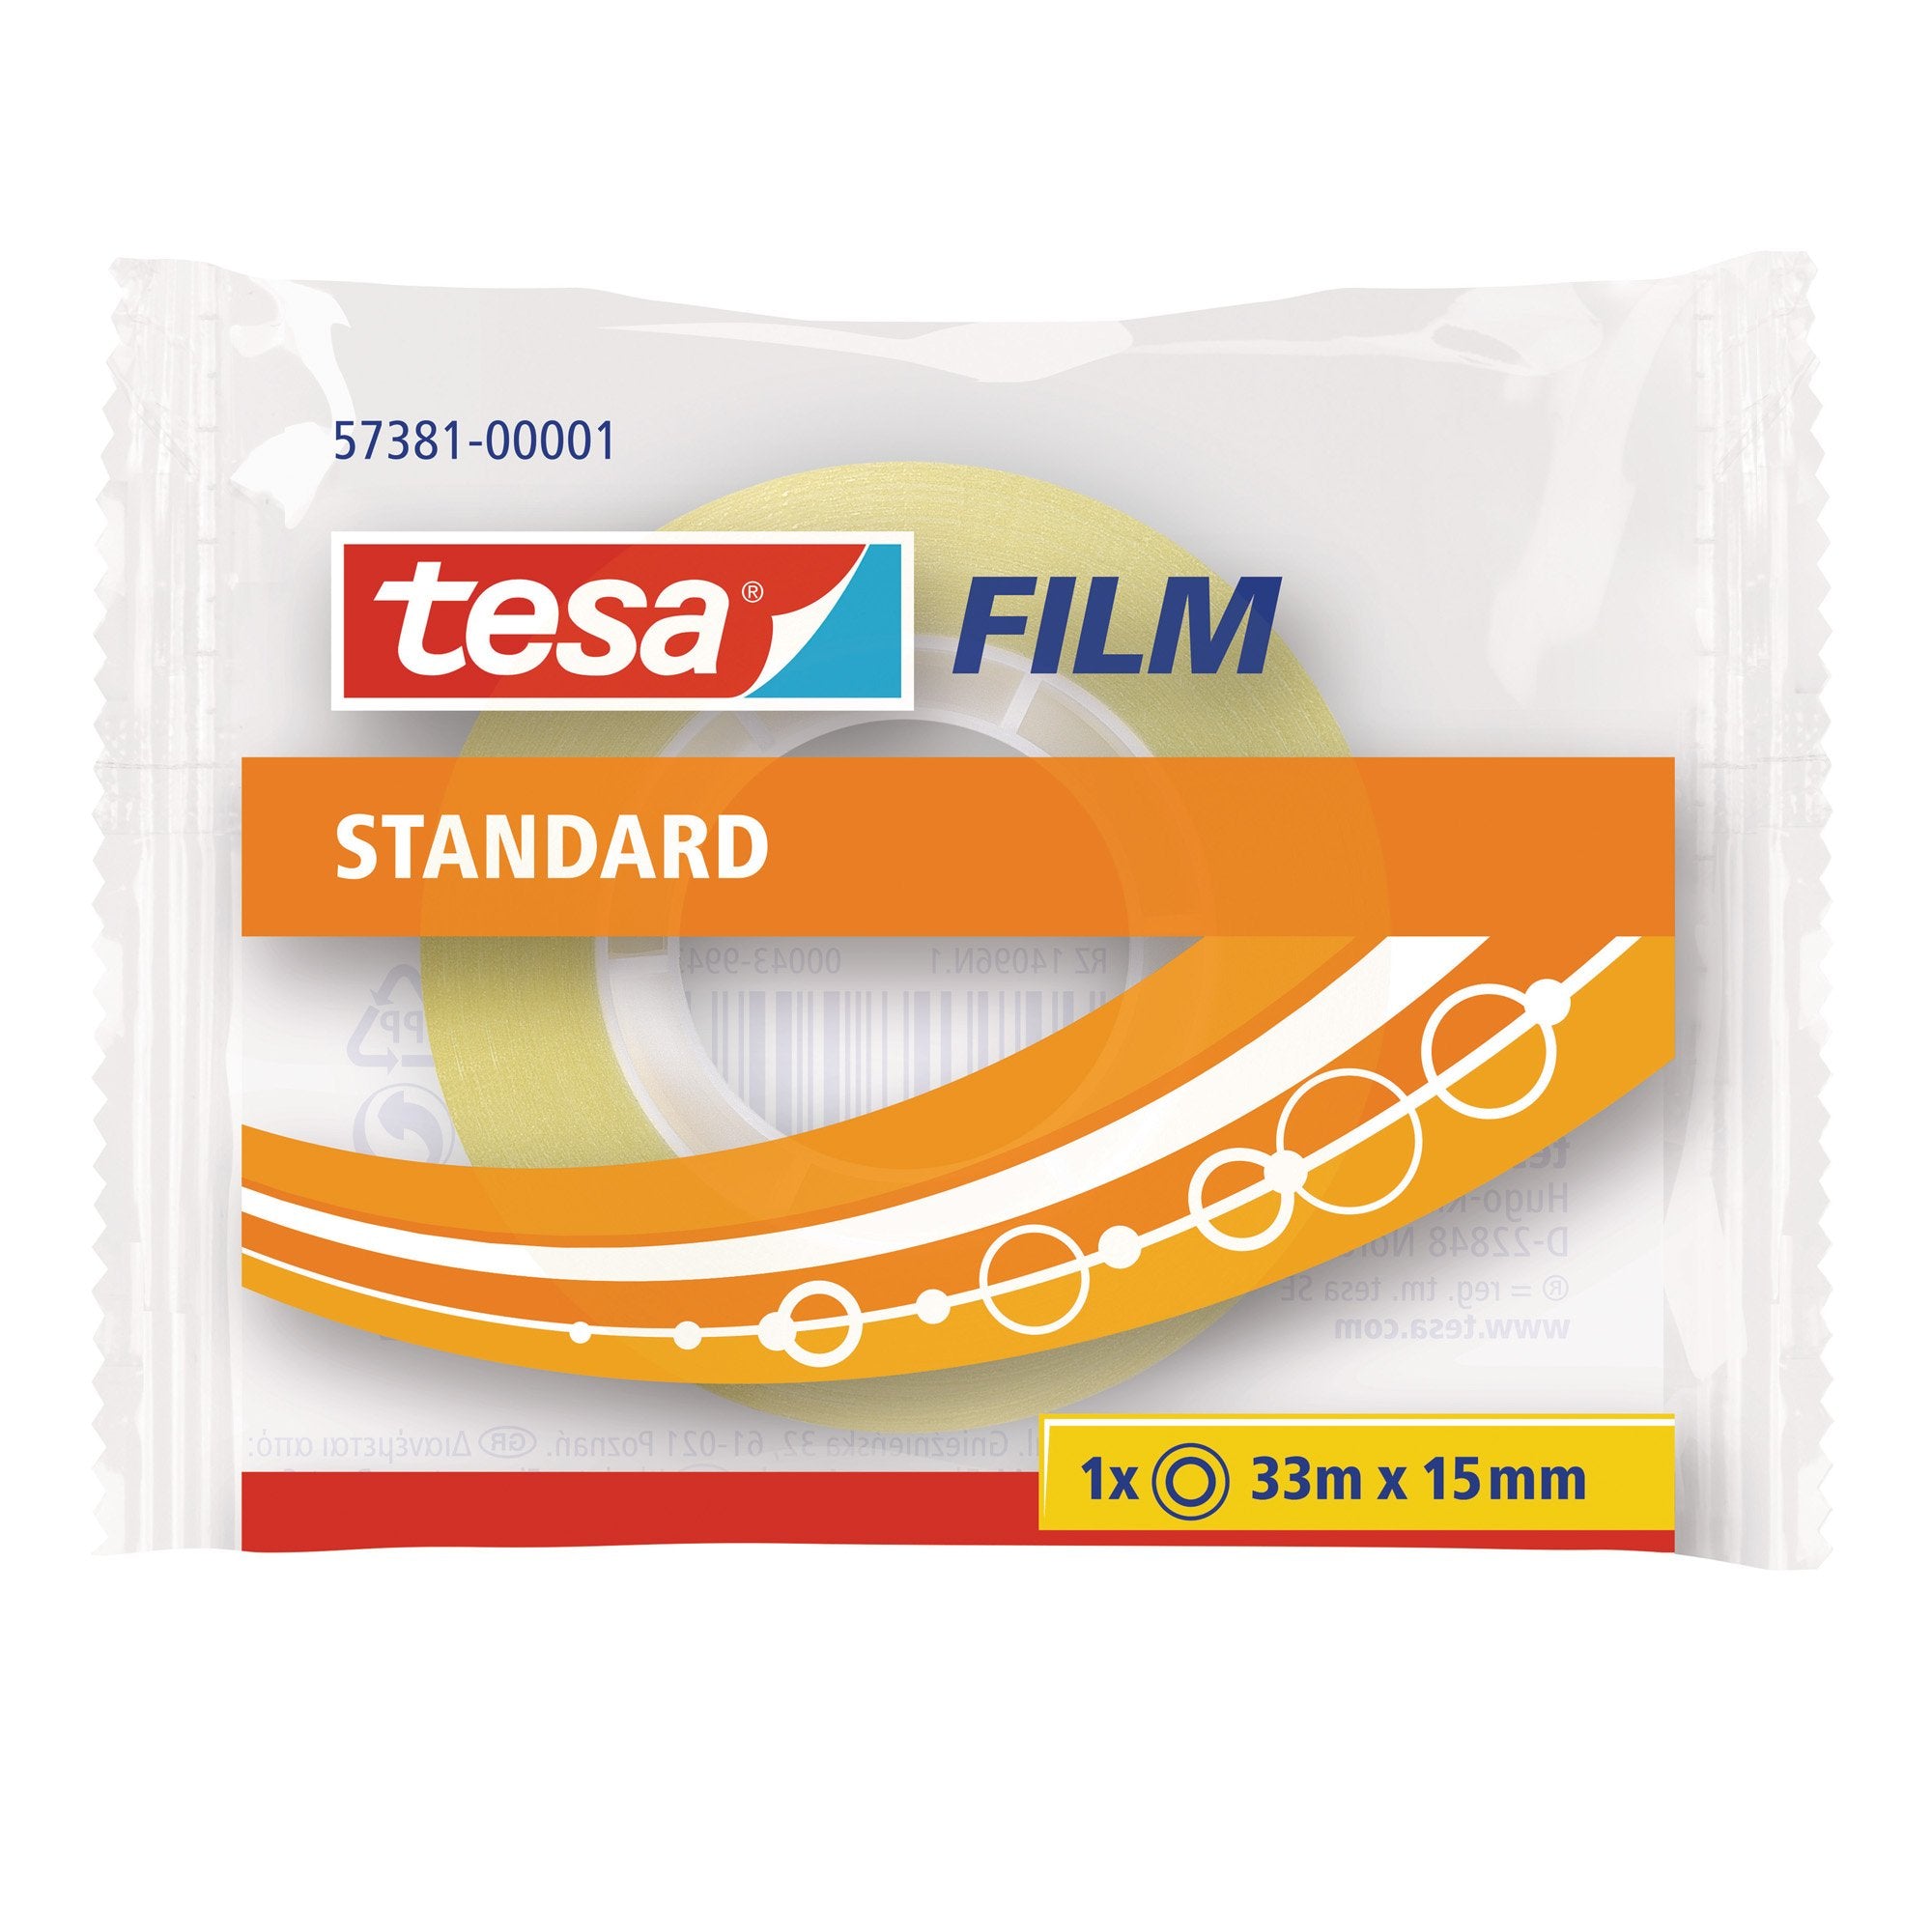 tesa-nastro-adesivo-trasparente-film-33mx15mm-conf-singolarmente